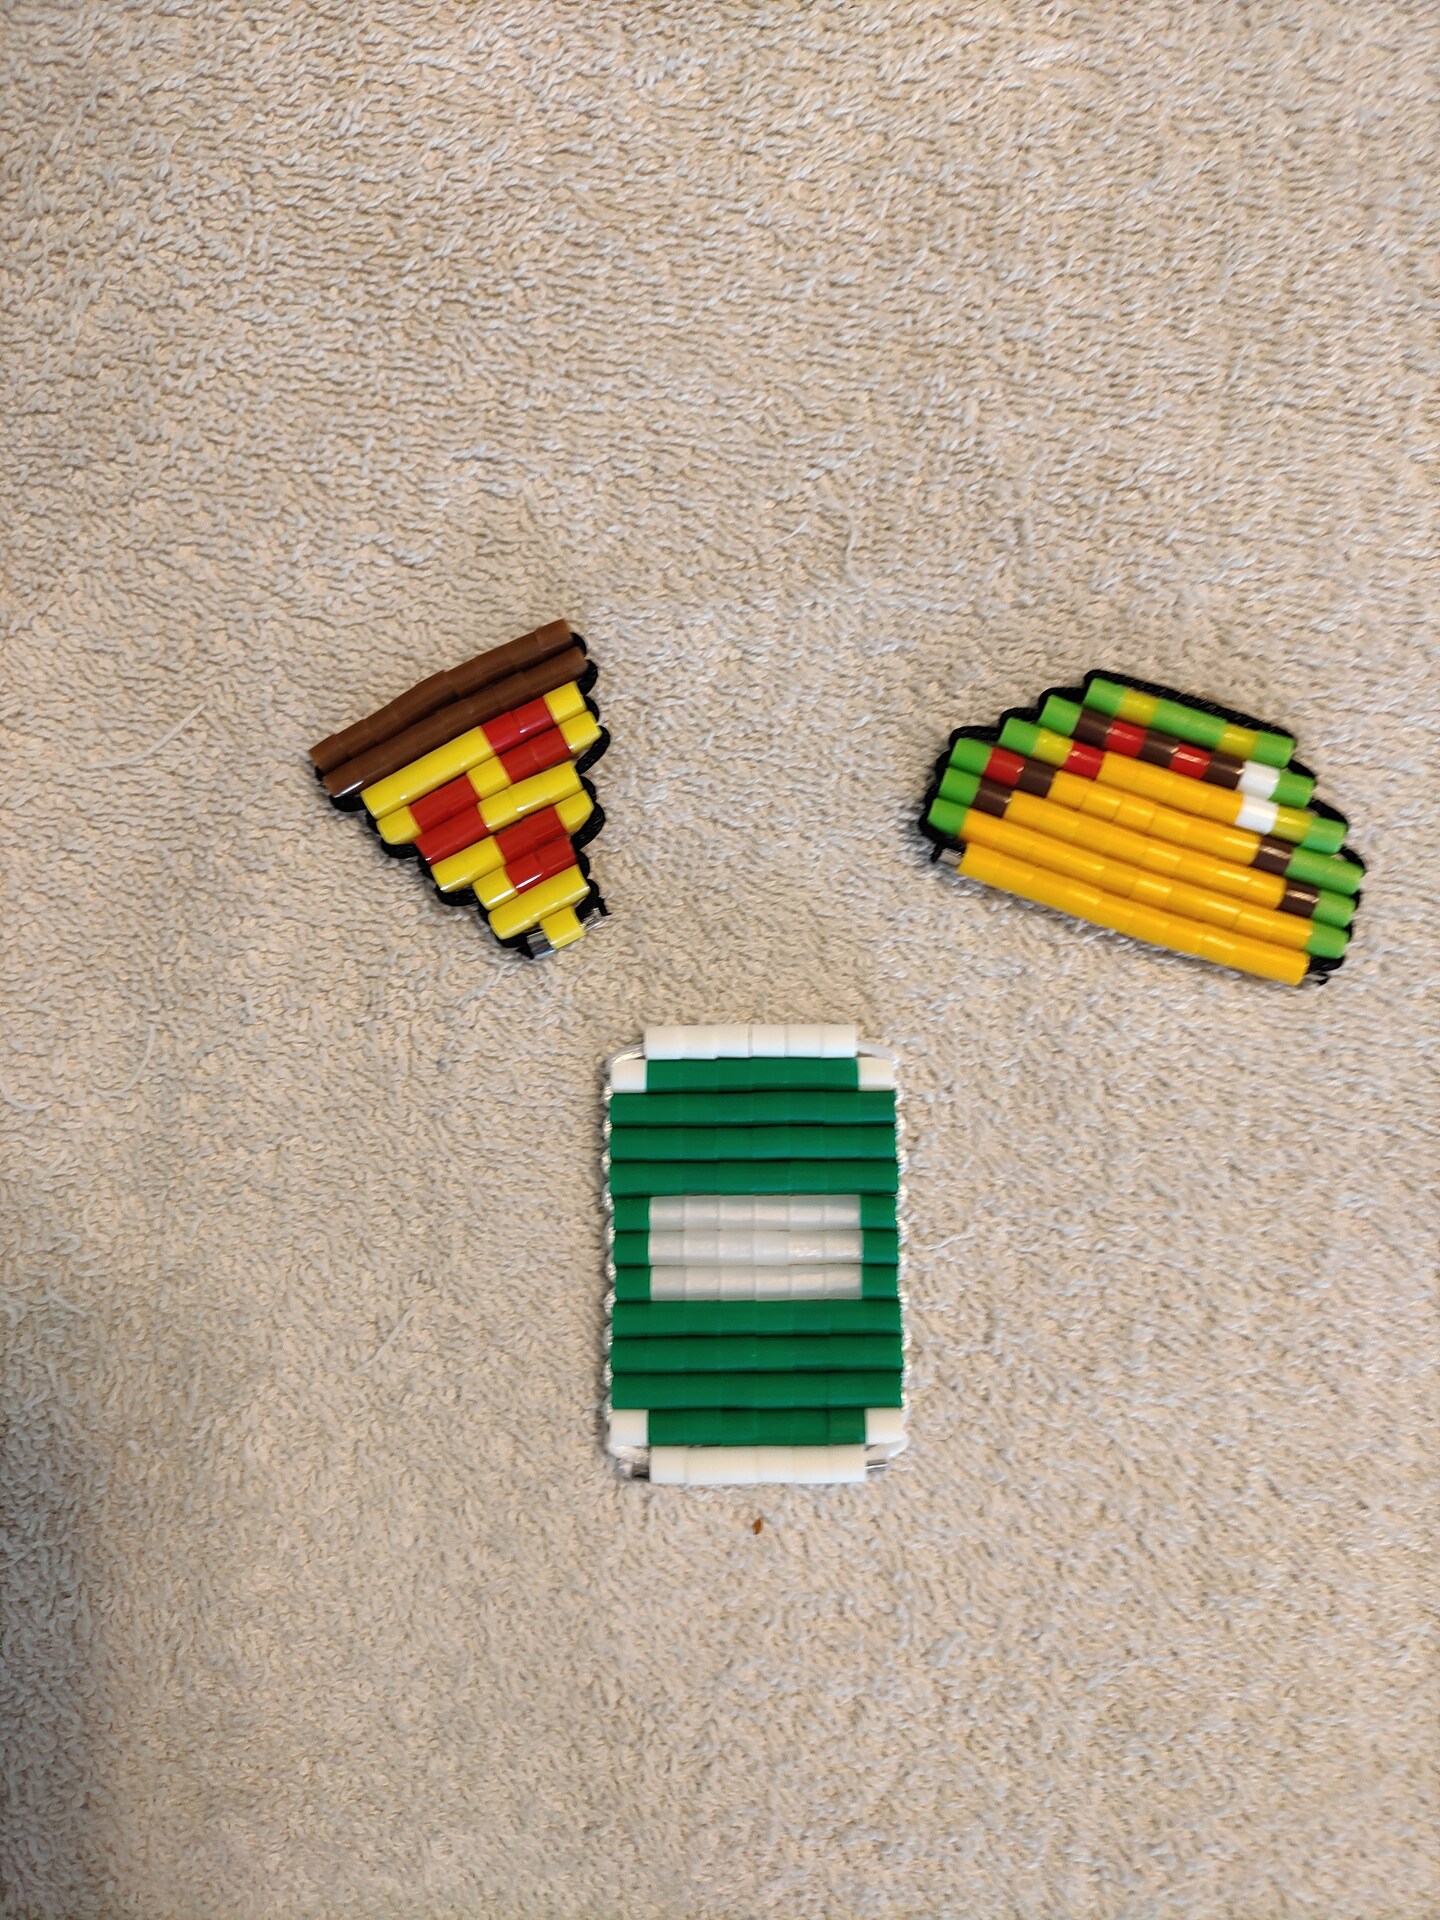 Copy-Pixel Art Pretend Play Food-Pizza, Taco and Soda-Perler Beads